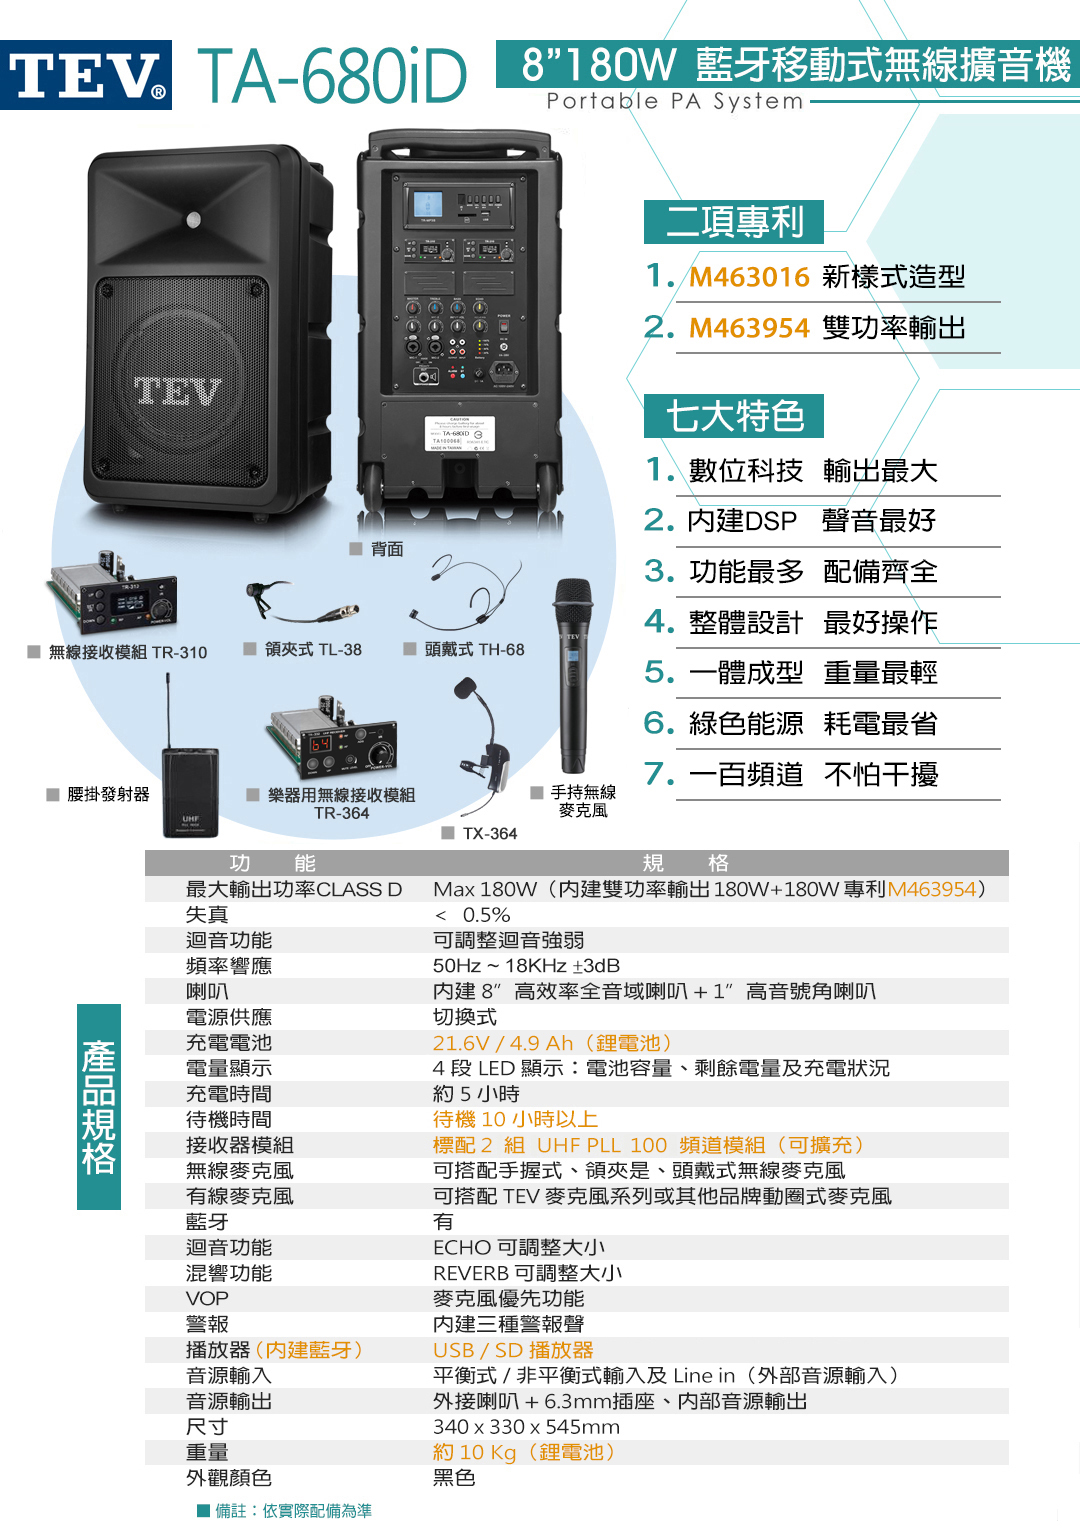 TA-60D 8180W 藍牙移動式無線擴音機Portable PA SystemTEV00000二項專利1.M463016 新樣式造型2. M463954 雙功率輸出七大特色1.數位科技 輸出最大2.內建DSP 聲音最好 背面3.功最多 配備齊全4.整體設計 最好操作 無線接收模組 TR-310  式 TL-38 頭戴式 TH-685.一體成型 重量最輕6.綠色能源 耗電最省7.一百頻道 不怕干擾TB-300 樂用無線接收模組TR-364TM-8100TX-364功能最大輸出功率CLASS D失真迴音功能頻率響應喇叭電源供應充電電池電量顯示充電時間待機時間接收器模組無線麥克風有線麥克風藍牙迴音功能混響功能VOP警報播放器(內建藍牙)音源輸入音源輸出尺寸重量規格Max 180W(內建雙功率輸出180W+180W專利M463954) 0.5%可調整迴音強弱50Hz~18KHz±3dB內建8高效率全音域喇叭+1高音號角喇叭切換式11.1V/5200mAh(電池)x24 段 LED 顯示:電池容量、剩餘電量及充電狀況約5小時待機10小時以上標配2 組 UHF PLL 100 頻道模組(可擴充)可搭配手握式、領夾是、頭戴式無線麥克風可搭配 TEV 麥克風系列或其他品牌動圈式麥克風有ECHO 可調整大小REVERB 可調整大小麥克風優先功能内建三種警報聲USB/SD 播放器平衡式/非平衡式輸入及 Line in(外部音源輸入)外接喇叭+6.3mm插座、内部音源輸出340 x 330 x 545mm約 11 (鋰電池)外觀顏色黑色 備註:依實際配備為準